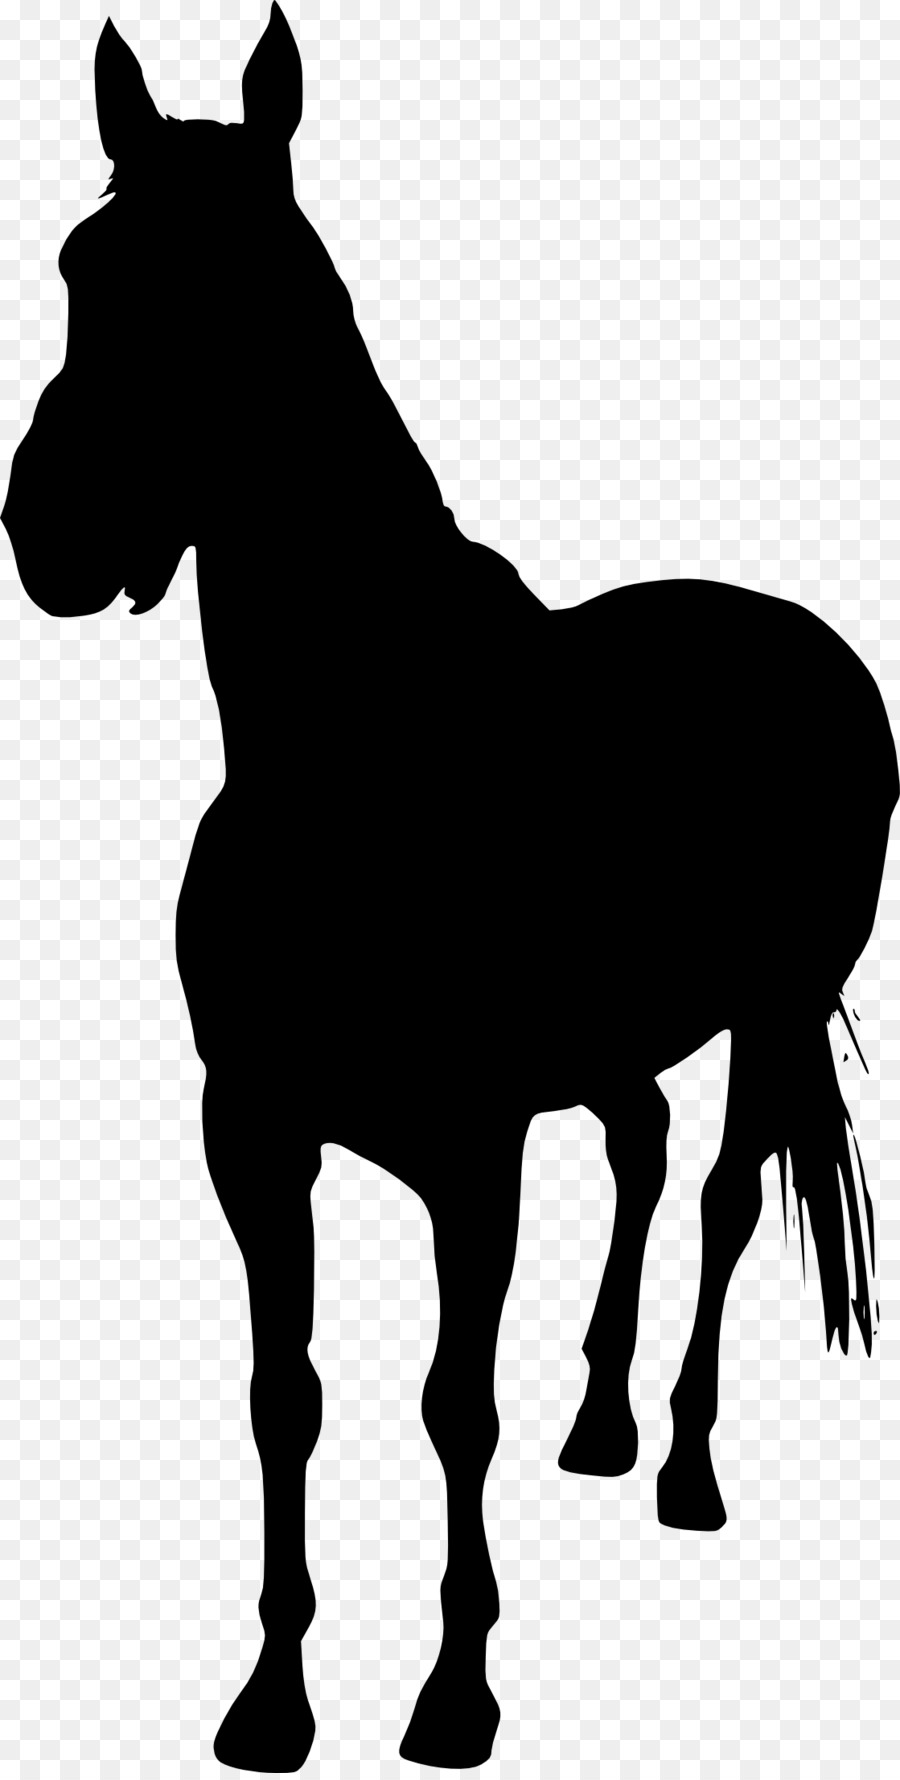 Unicorn Silhouette Clip art - headless horseman png download - 1119*2204 - Free Transparent Unicorn png Download.